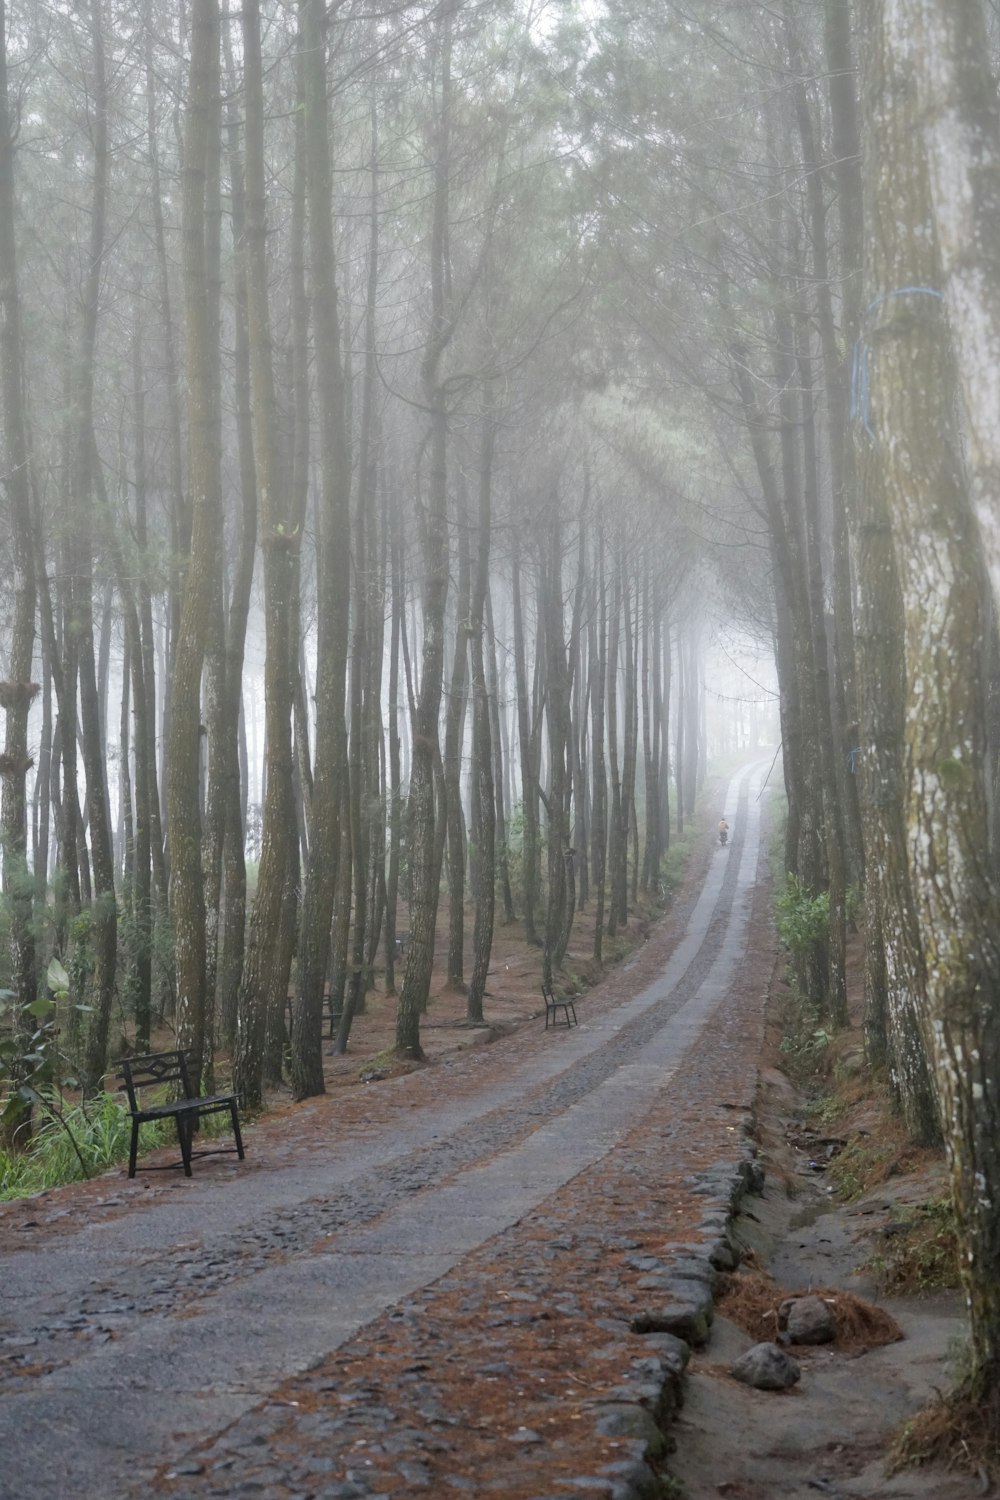 empty pathway between tall trees